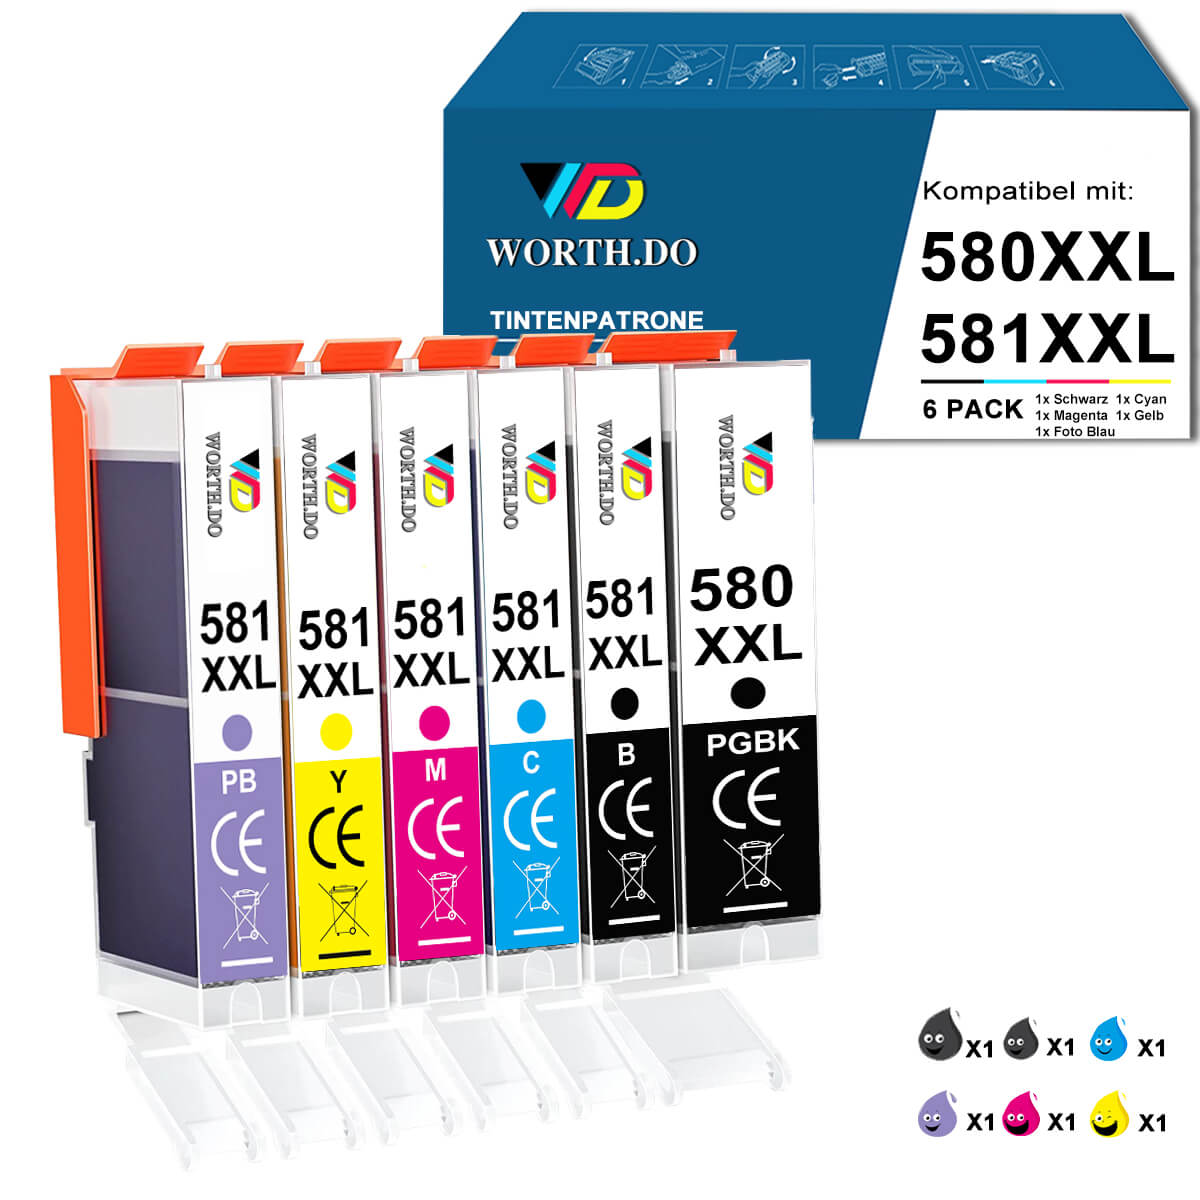    worthdo-kompatible-tintenpatronen-fuer-canon-pgi-580xl-cli-581xl-colorpack